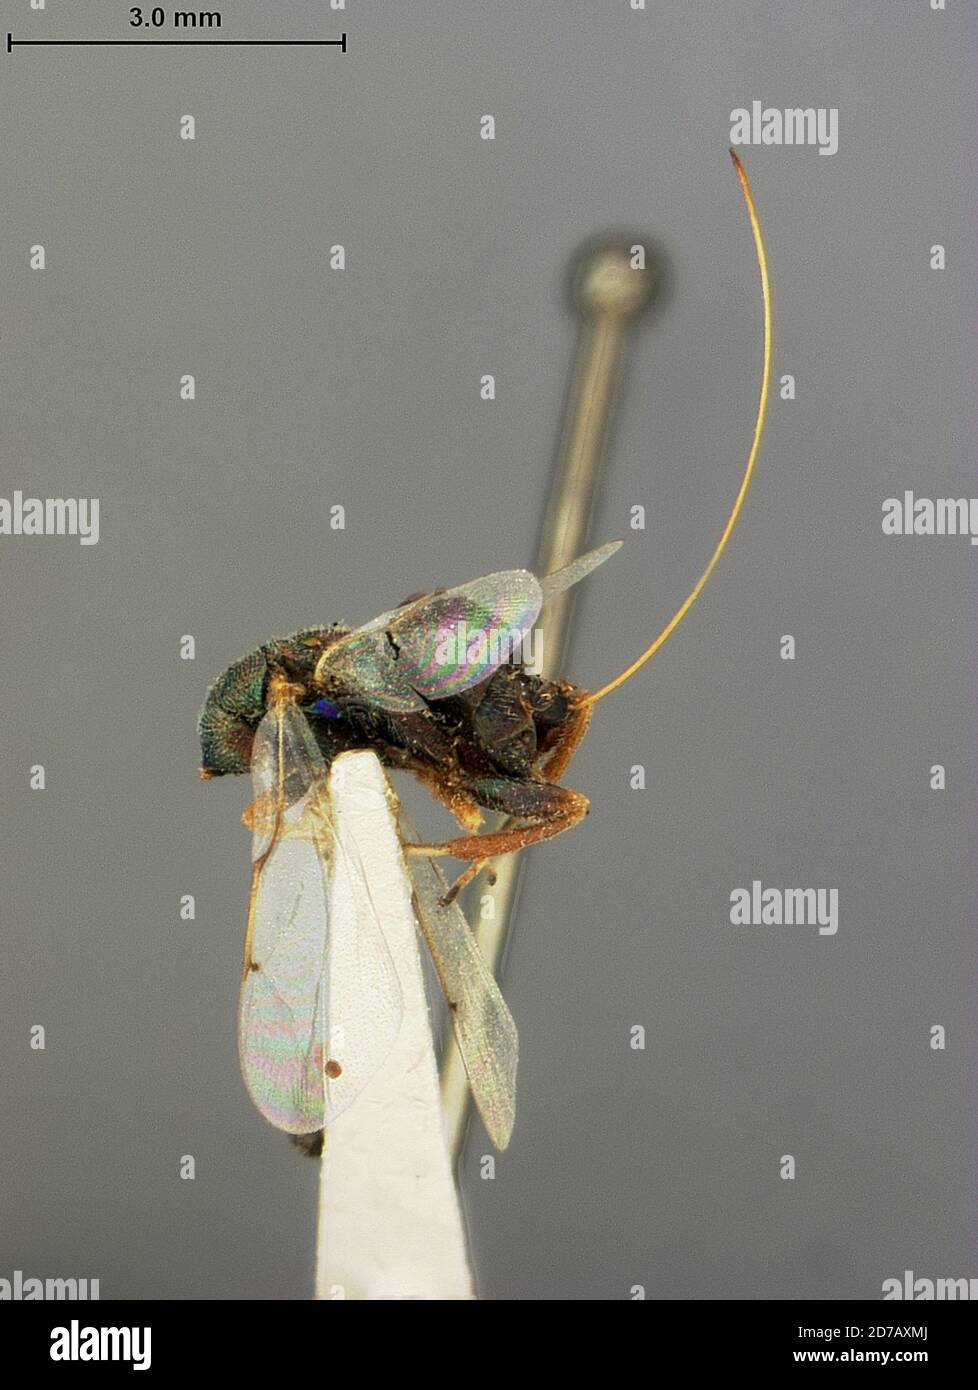 Guanajuato, Mexico, Torymus mexicanus Ashmead, 1899, Animalia, Arthropoda, Insecta, Hymenoptera, Torymidae Stock Photo